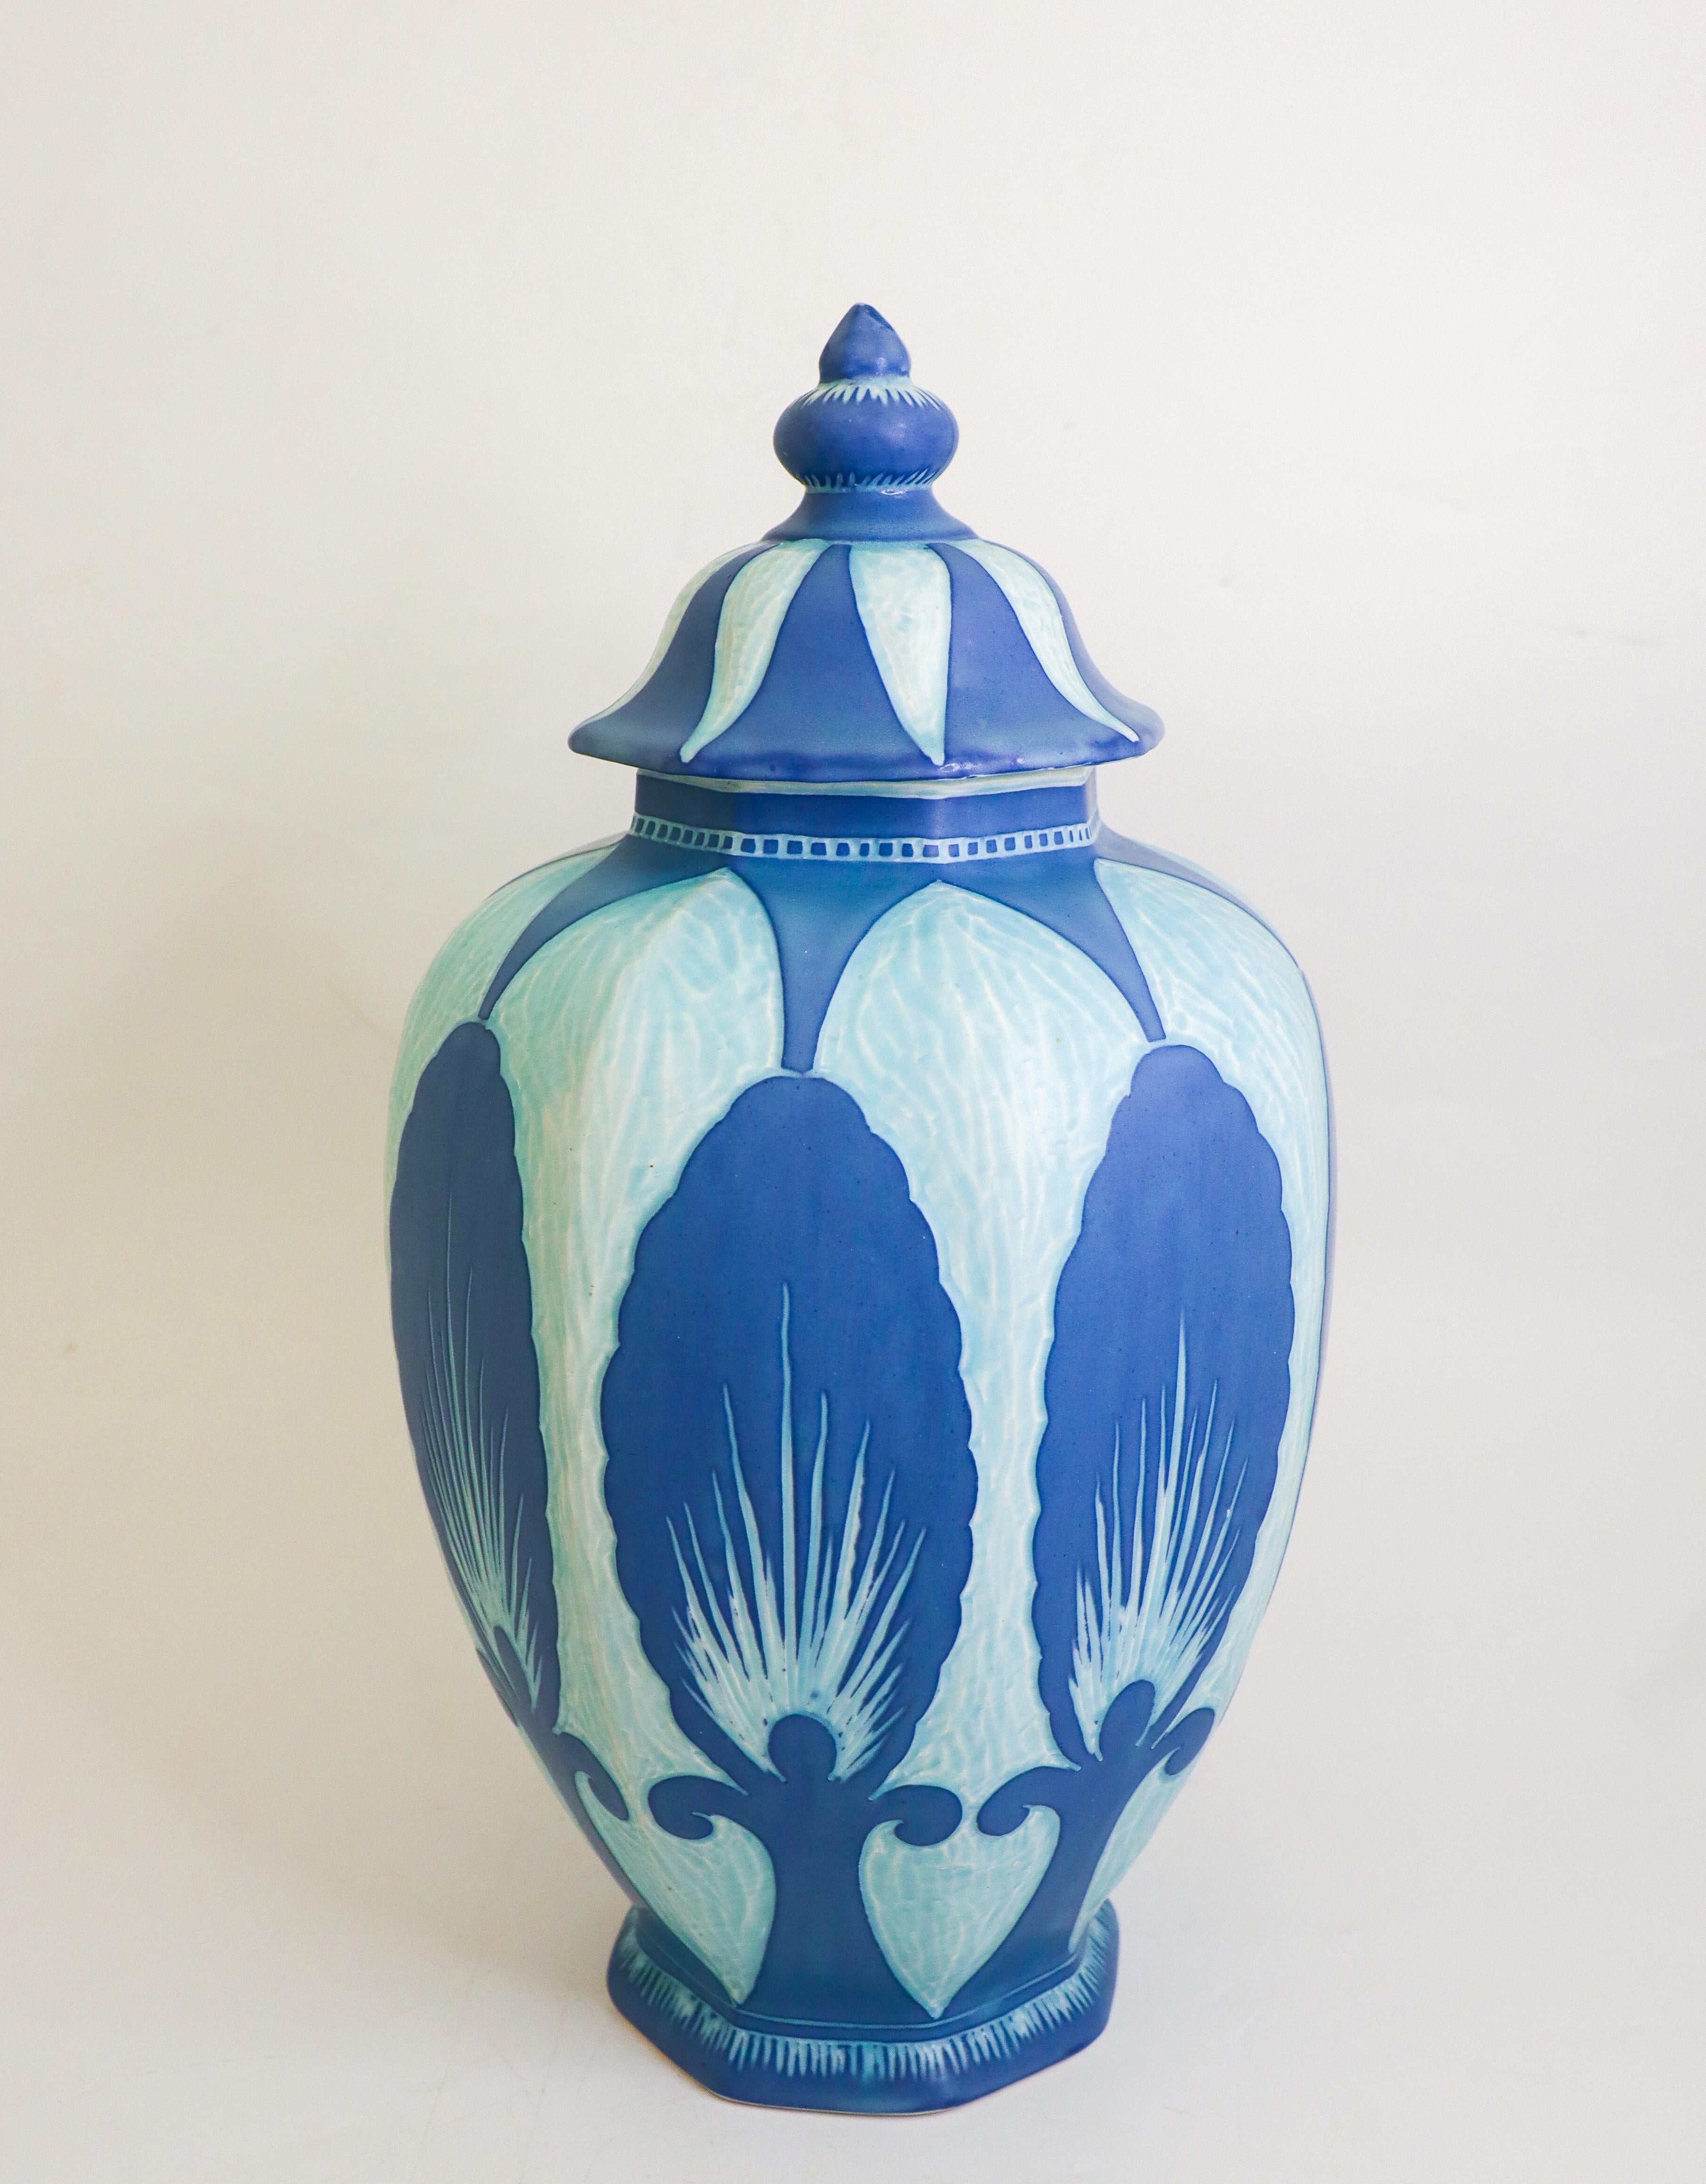 Rare Art Nouveau Ceramic Urn Turquoise & Blue Josef Ekberg Sgrafitto 1925 In Excellent Condition For Sale In Stockholm, SE